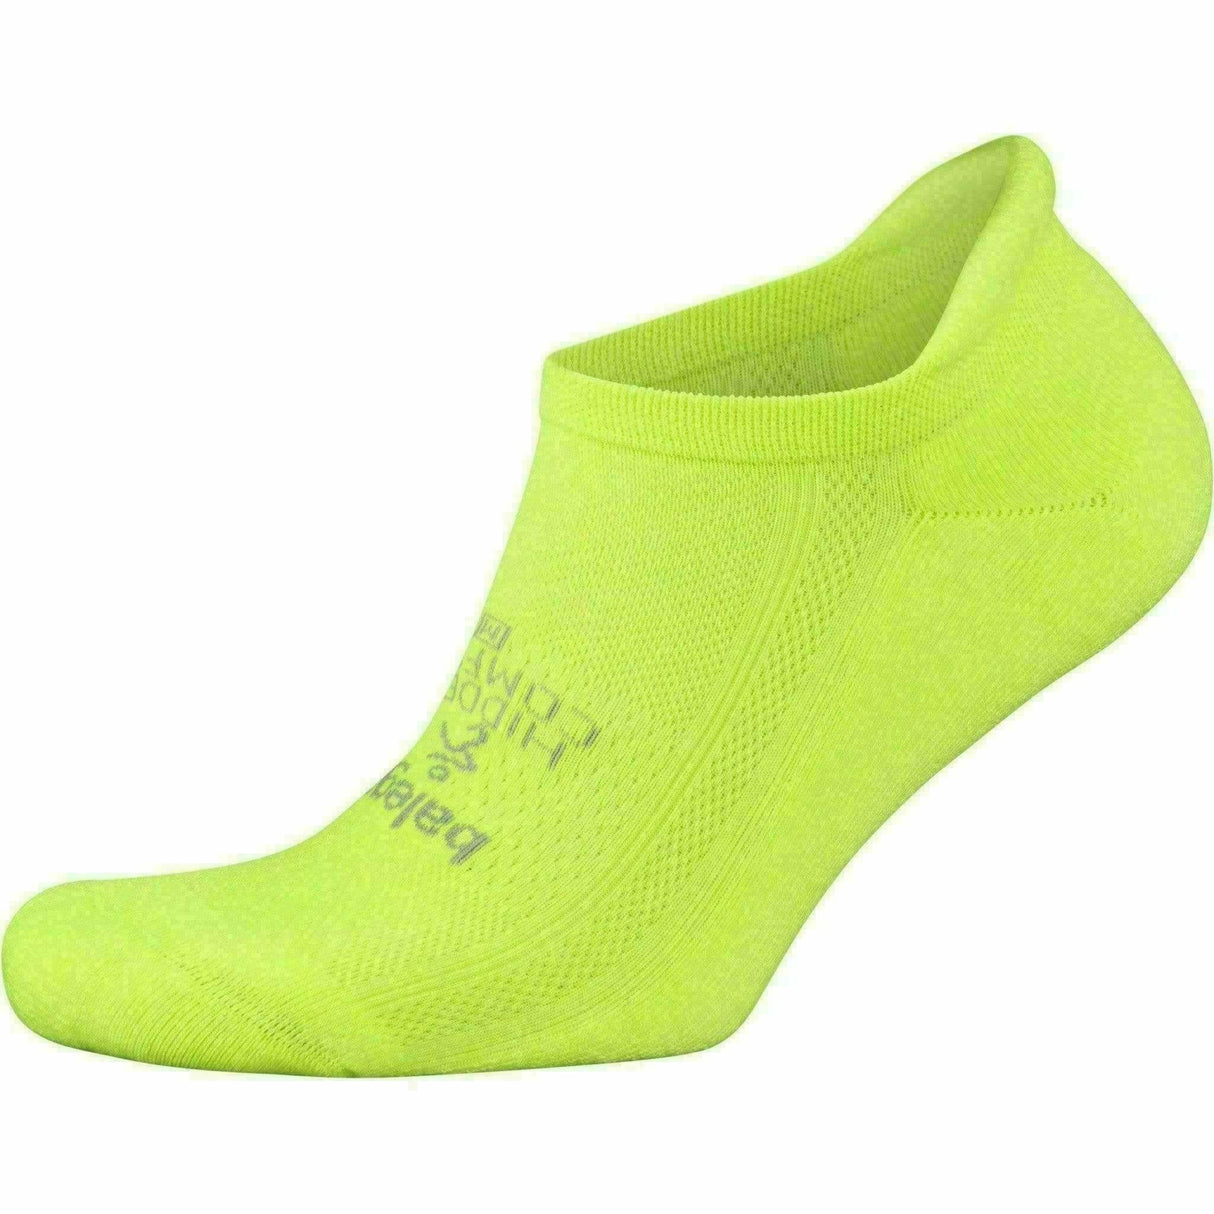 Balega Hidden Comfort No Show Tab Socks  -  Small / Zesty Yellow / Single